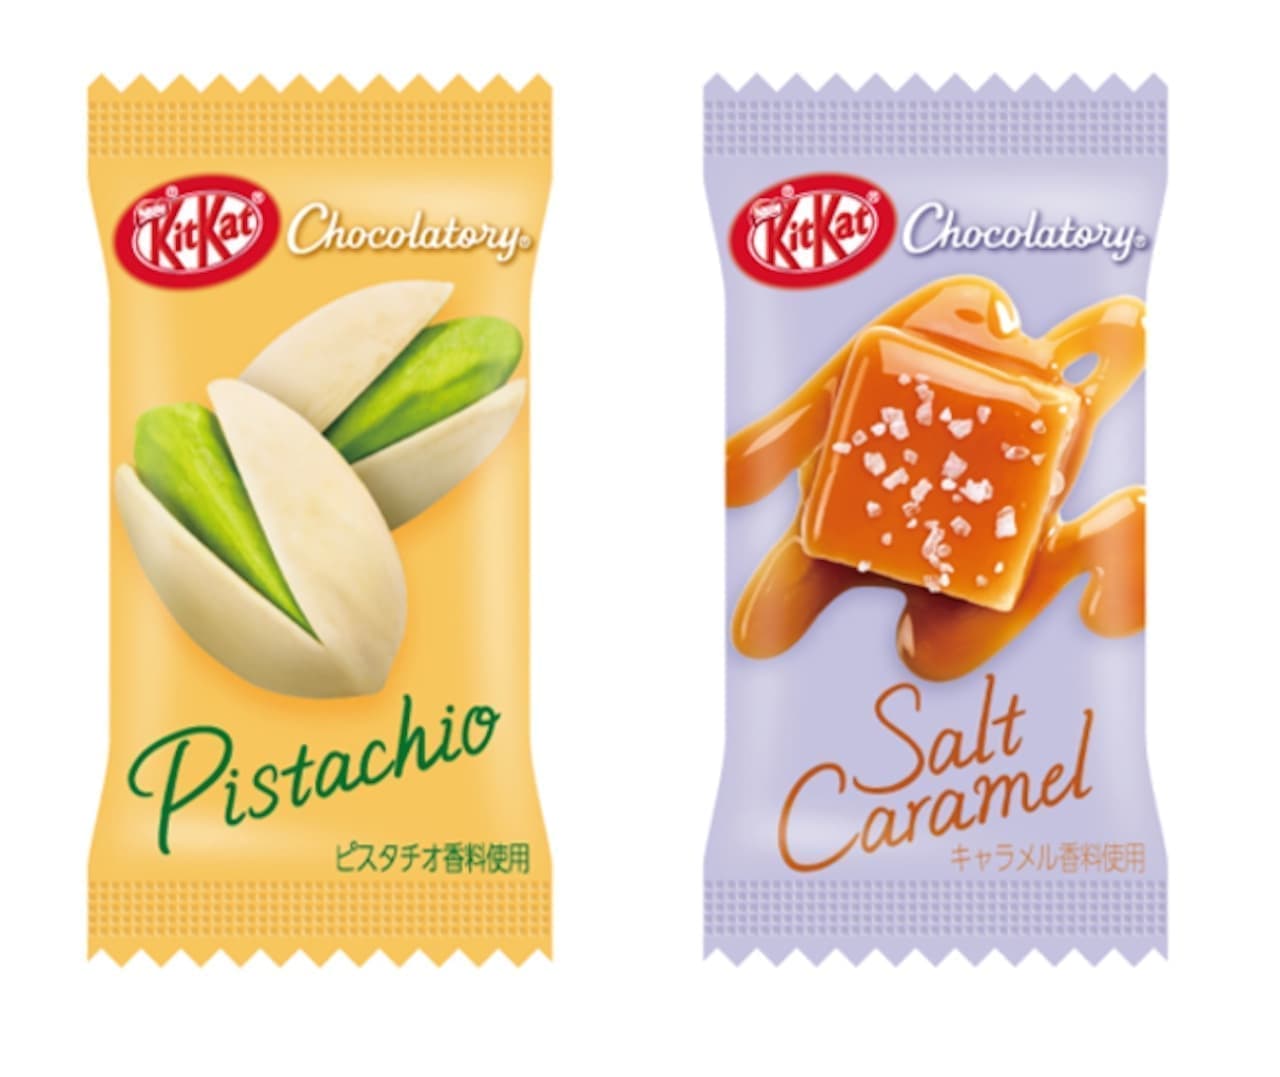 KitKat Chocolatery Pick To Mix "Pistachio" "Salt Caramel"